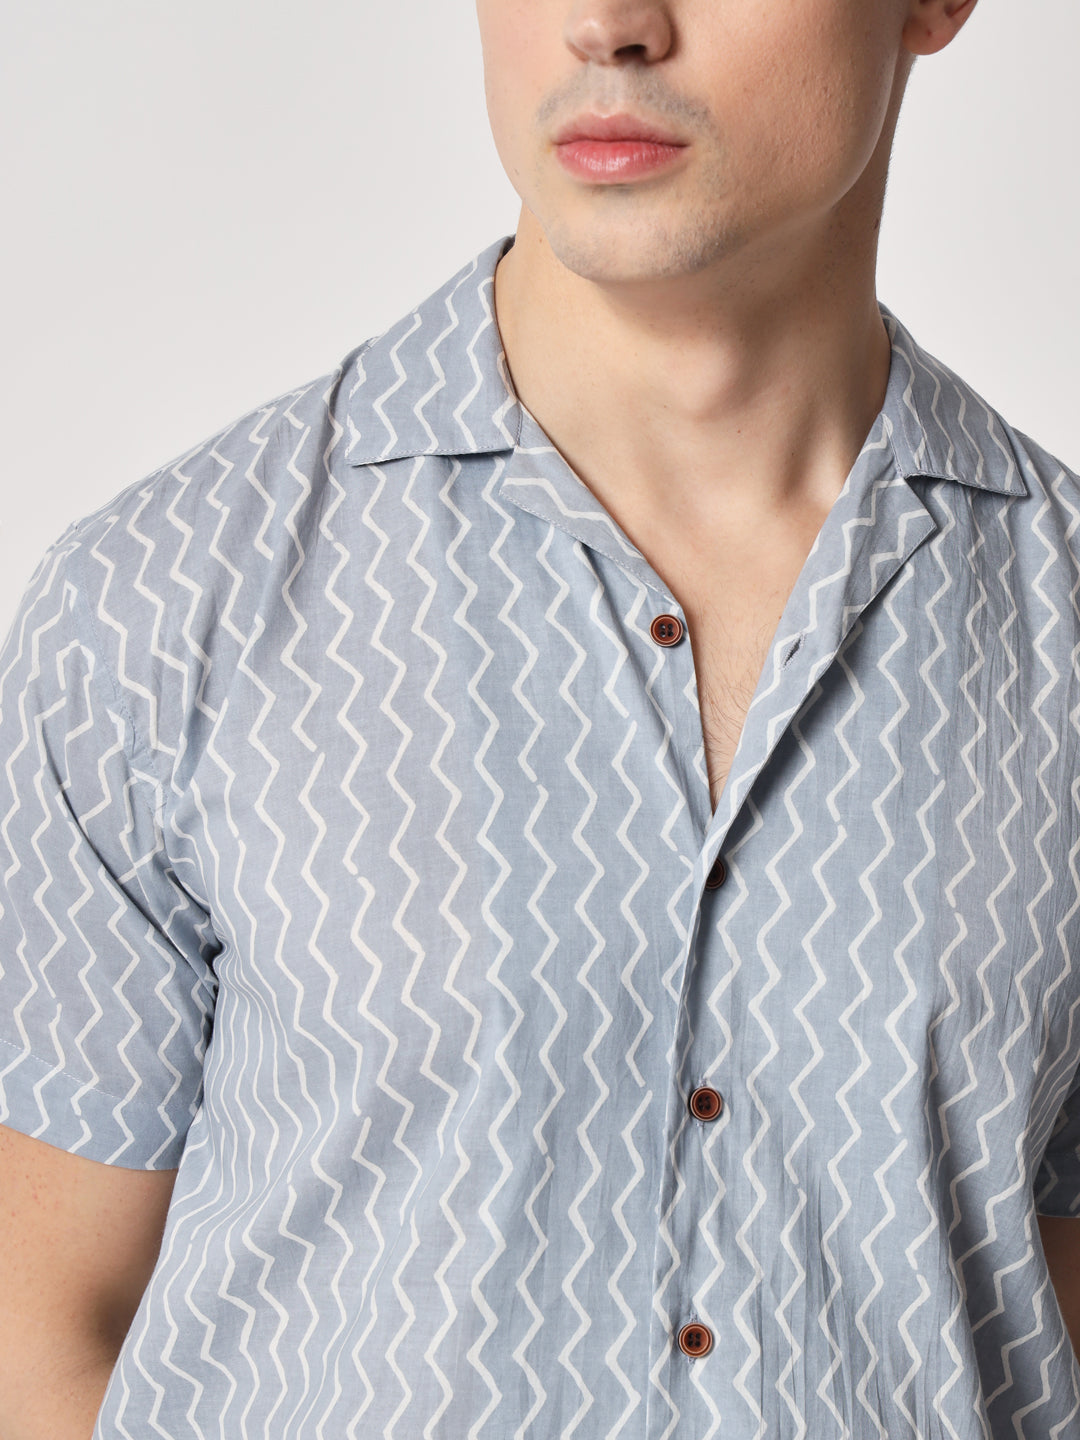 Firangi Yarn 100% Jaipuri Cotton Resort Chevron Printed Cuban Collar Casual Shirt Grey